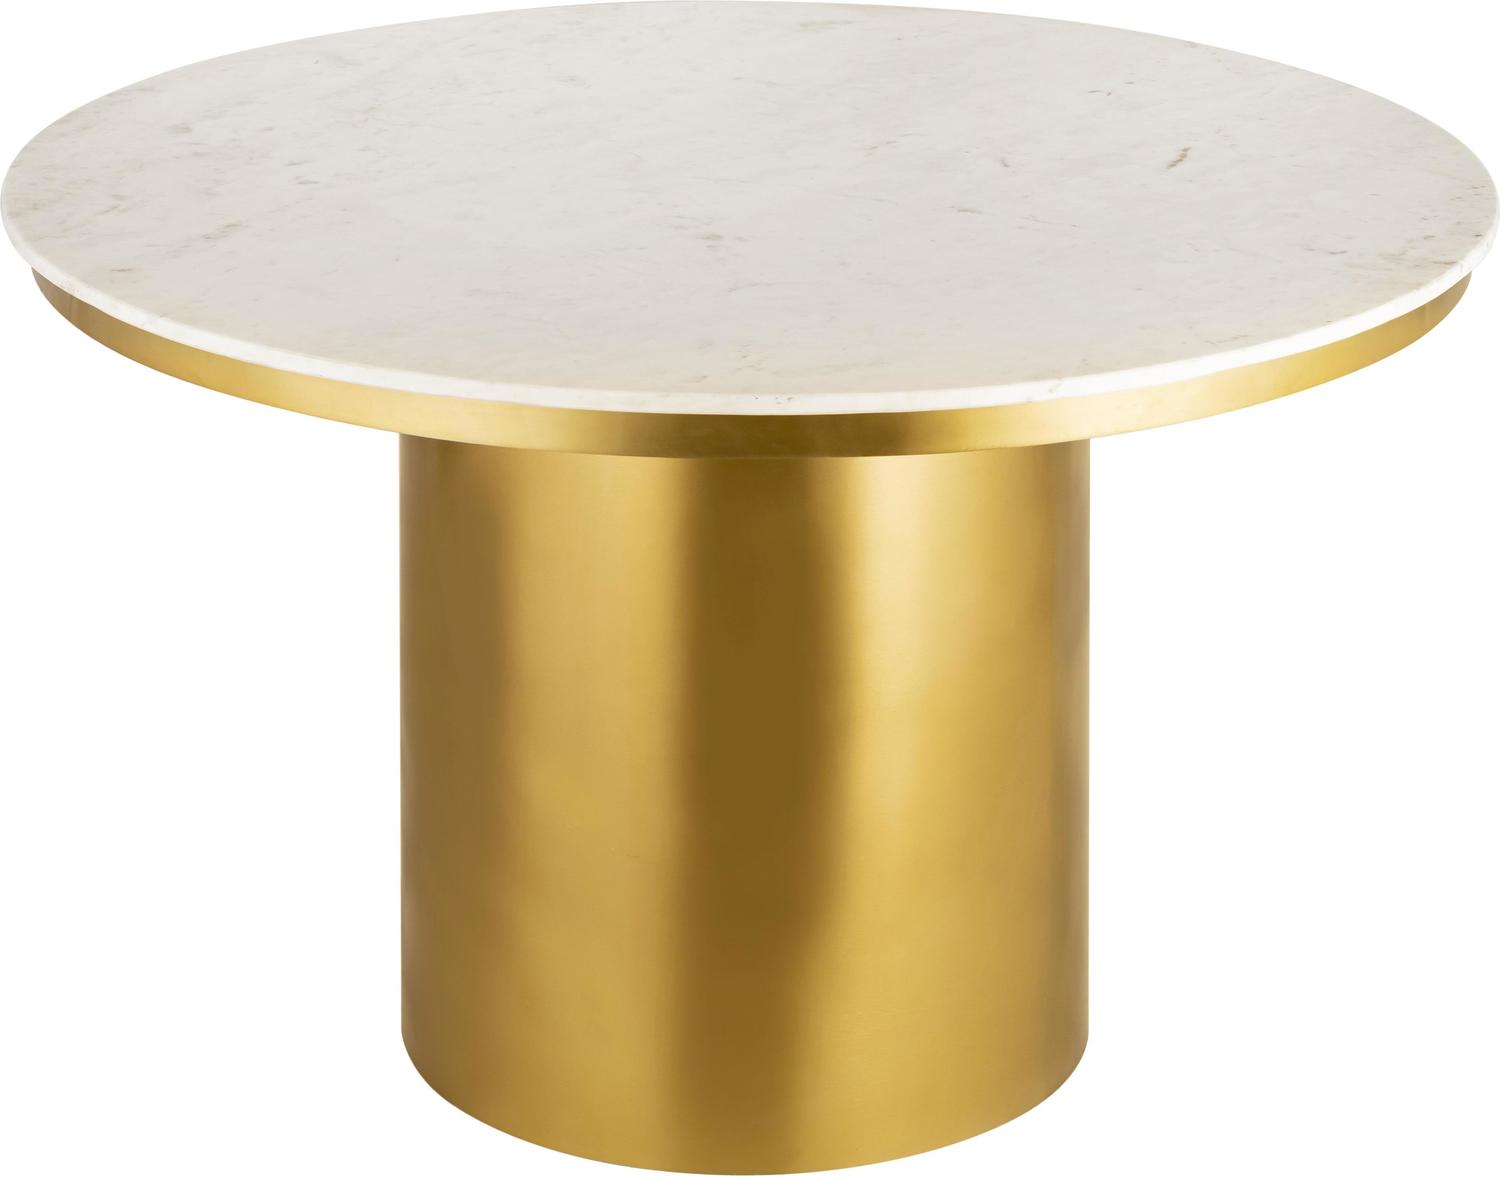 6 piece dining table set Contemporary Design Furniture Dining Tables Dining Room Tables Gold,White